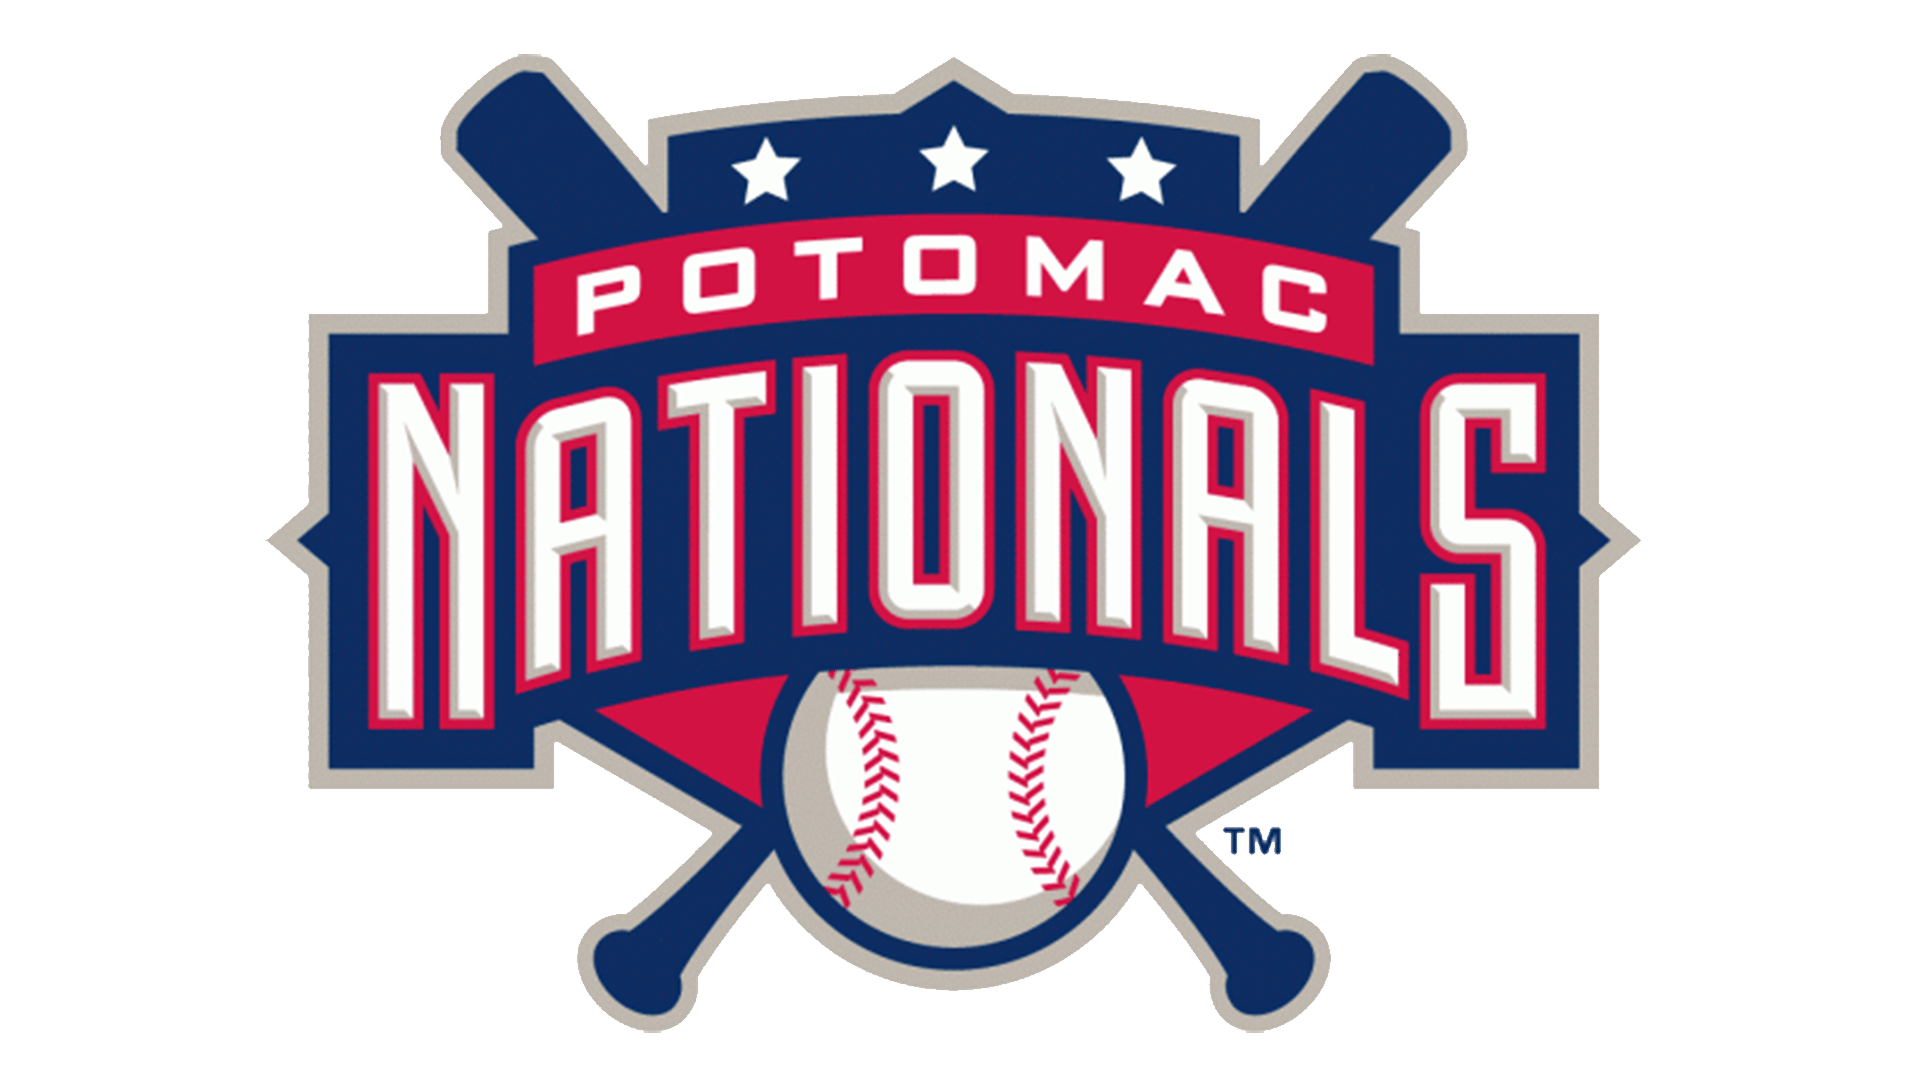 Nationals Logo - Potomac Nationals logo, symbol, meaning, History and Evolution